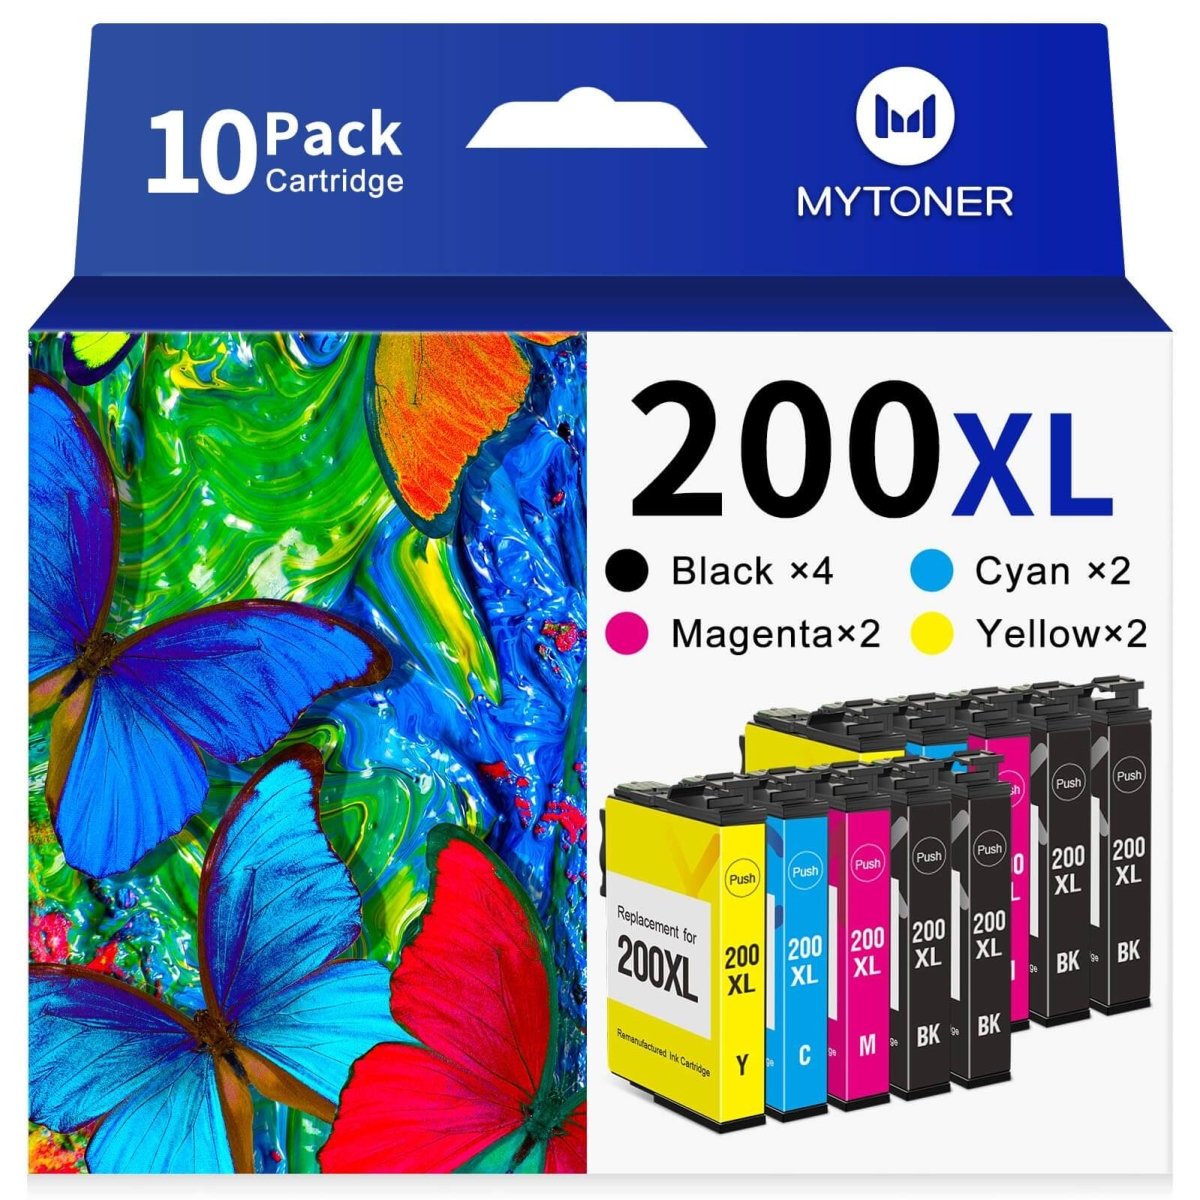 Epson 200XL T200XL Ink Cartridge Remanufactured High Yield 10 Pack: 4 Black, 2 Cyan, 2 Magenta, 2 Yellow - Linford Office:Printer Ink & Toner Cartridge